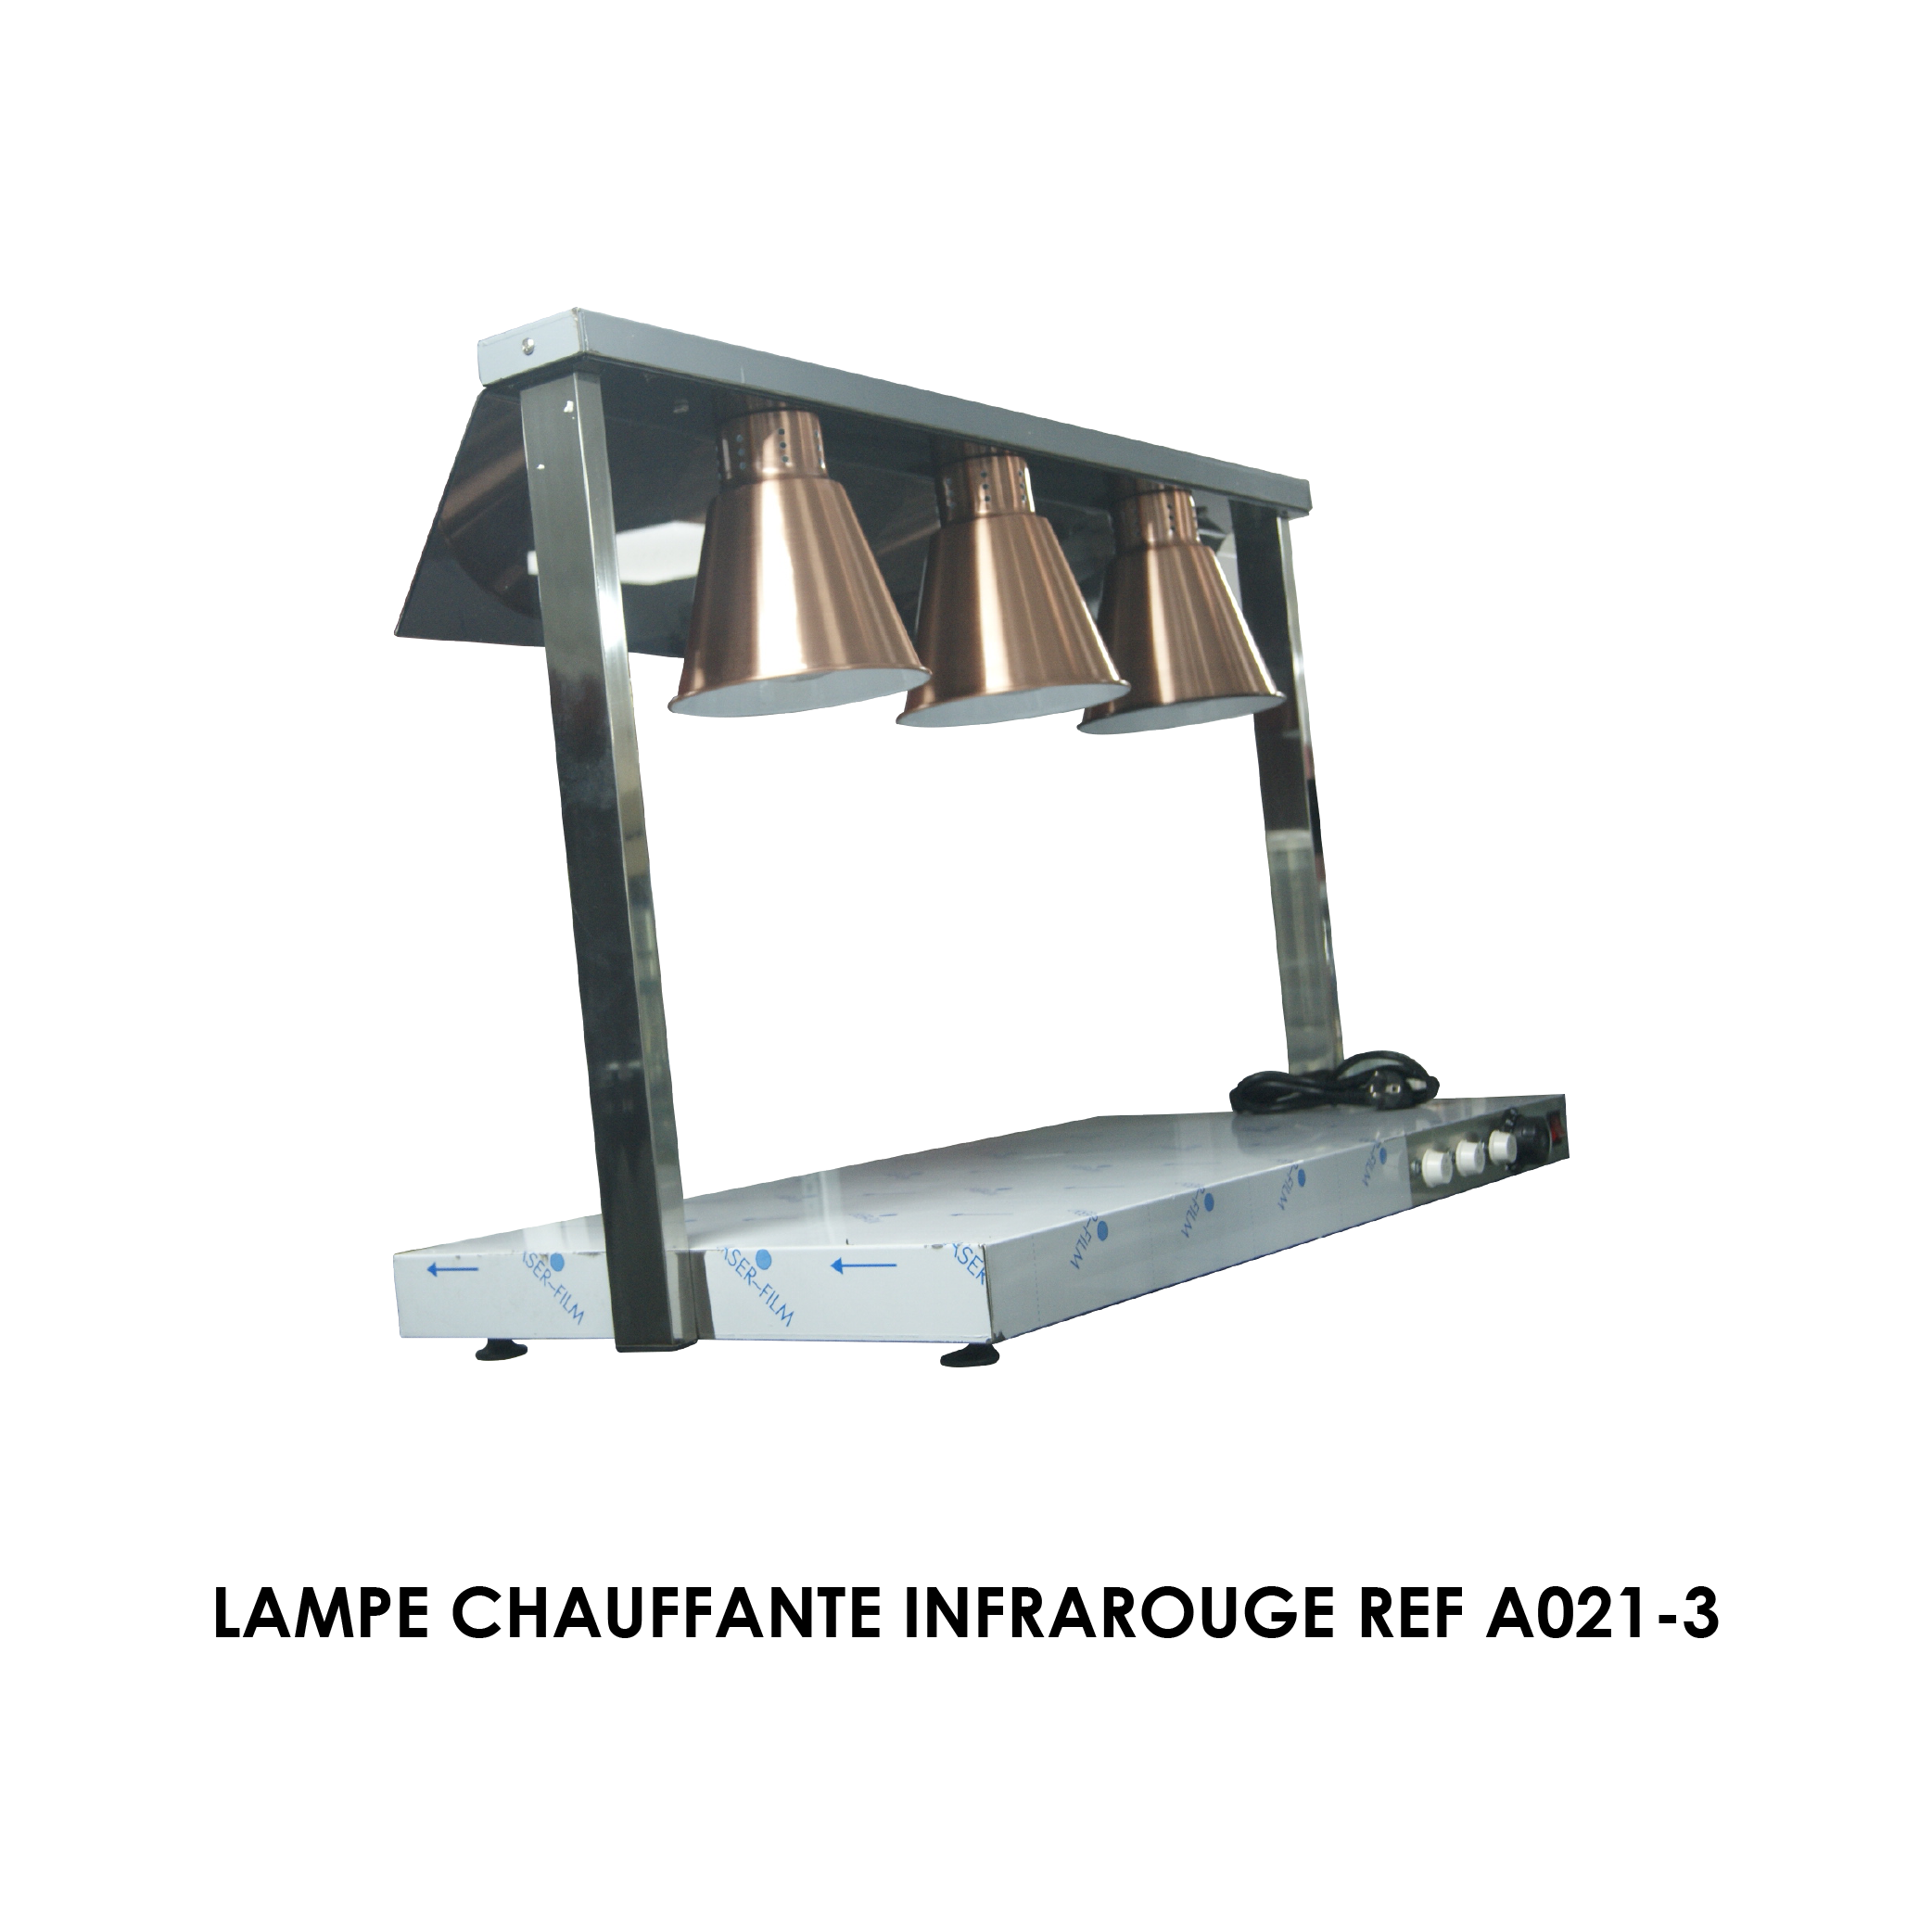 LAMPE CHAUFFANTE INFRAROUGE REF A021-3